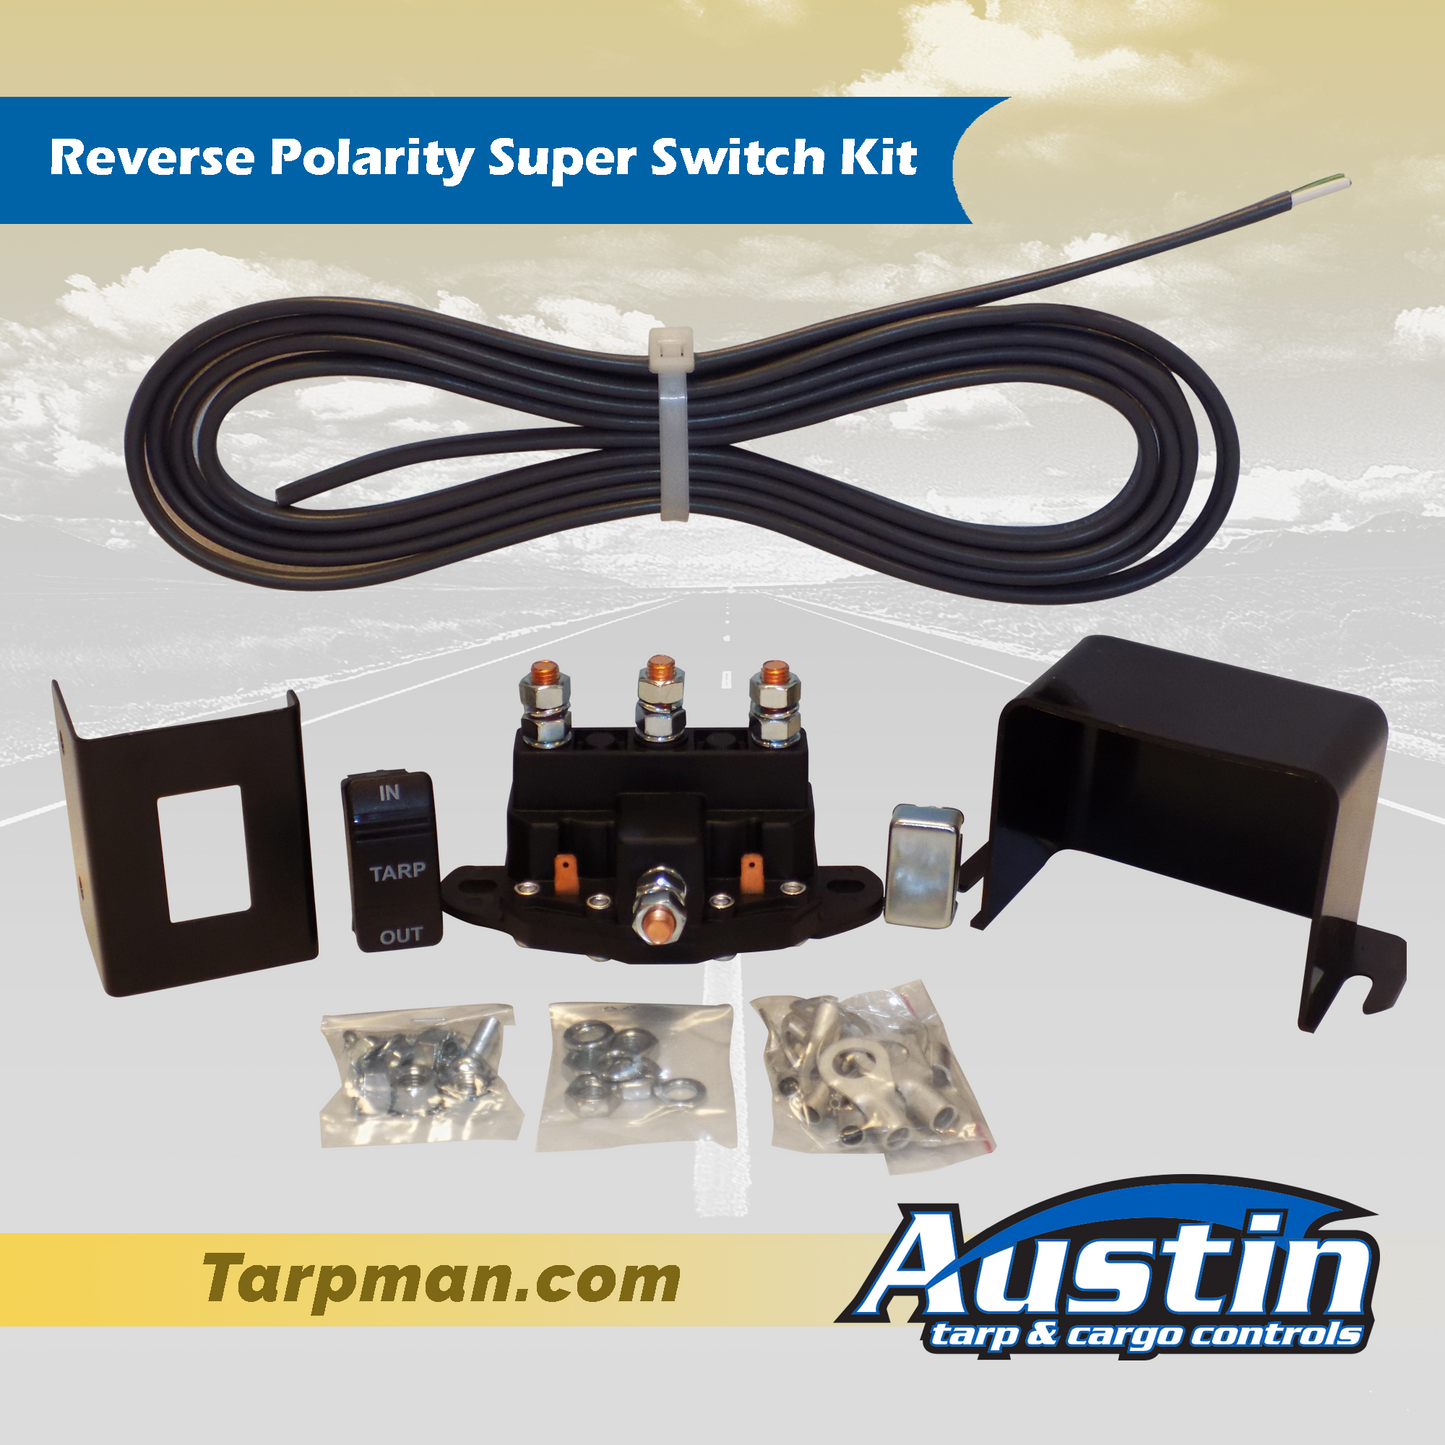 Reverse Polarity Super Switch Kit